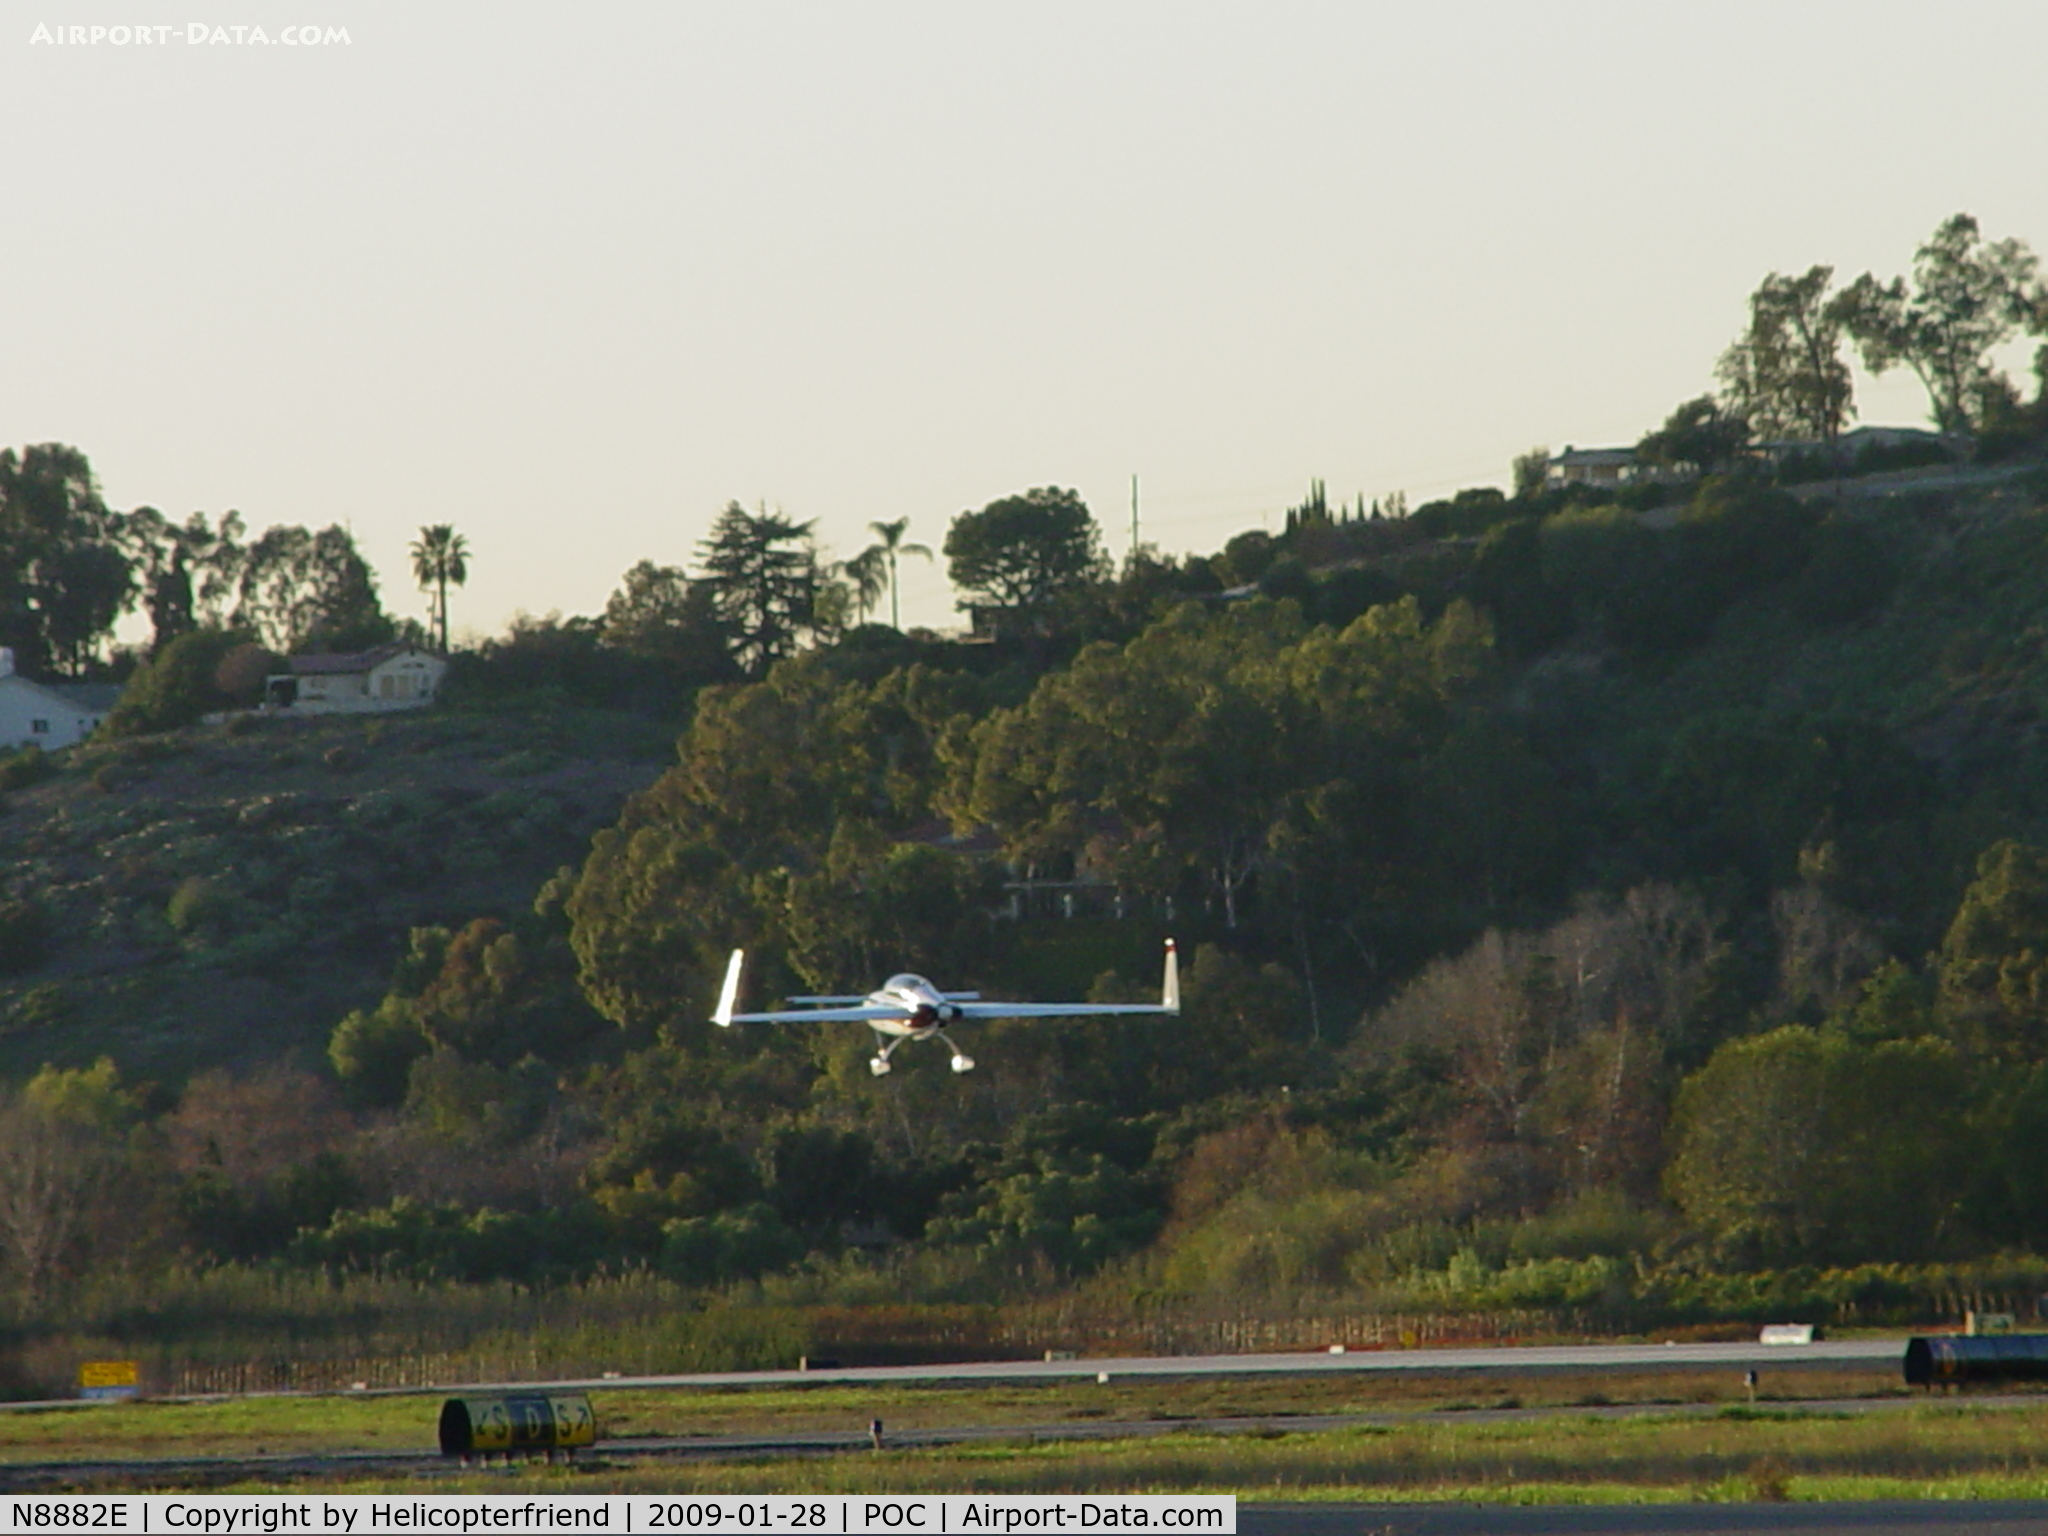 N8882E, 2008 Rutan Long-EZ C/N 001 (N8882E), Departing Brackett on 26L